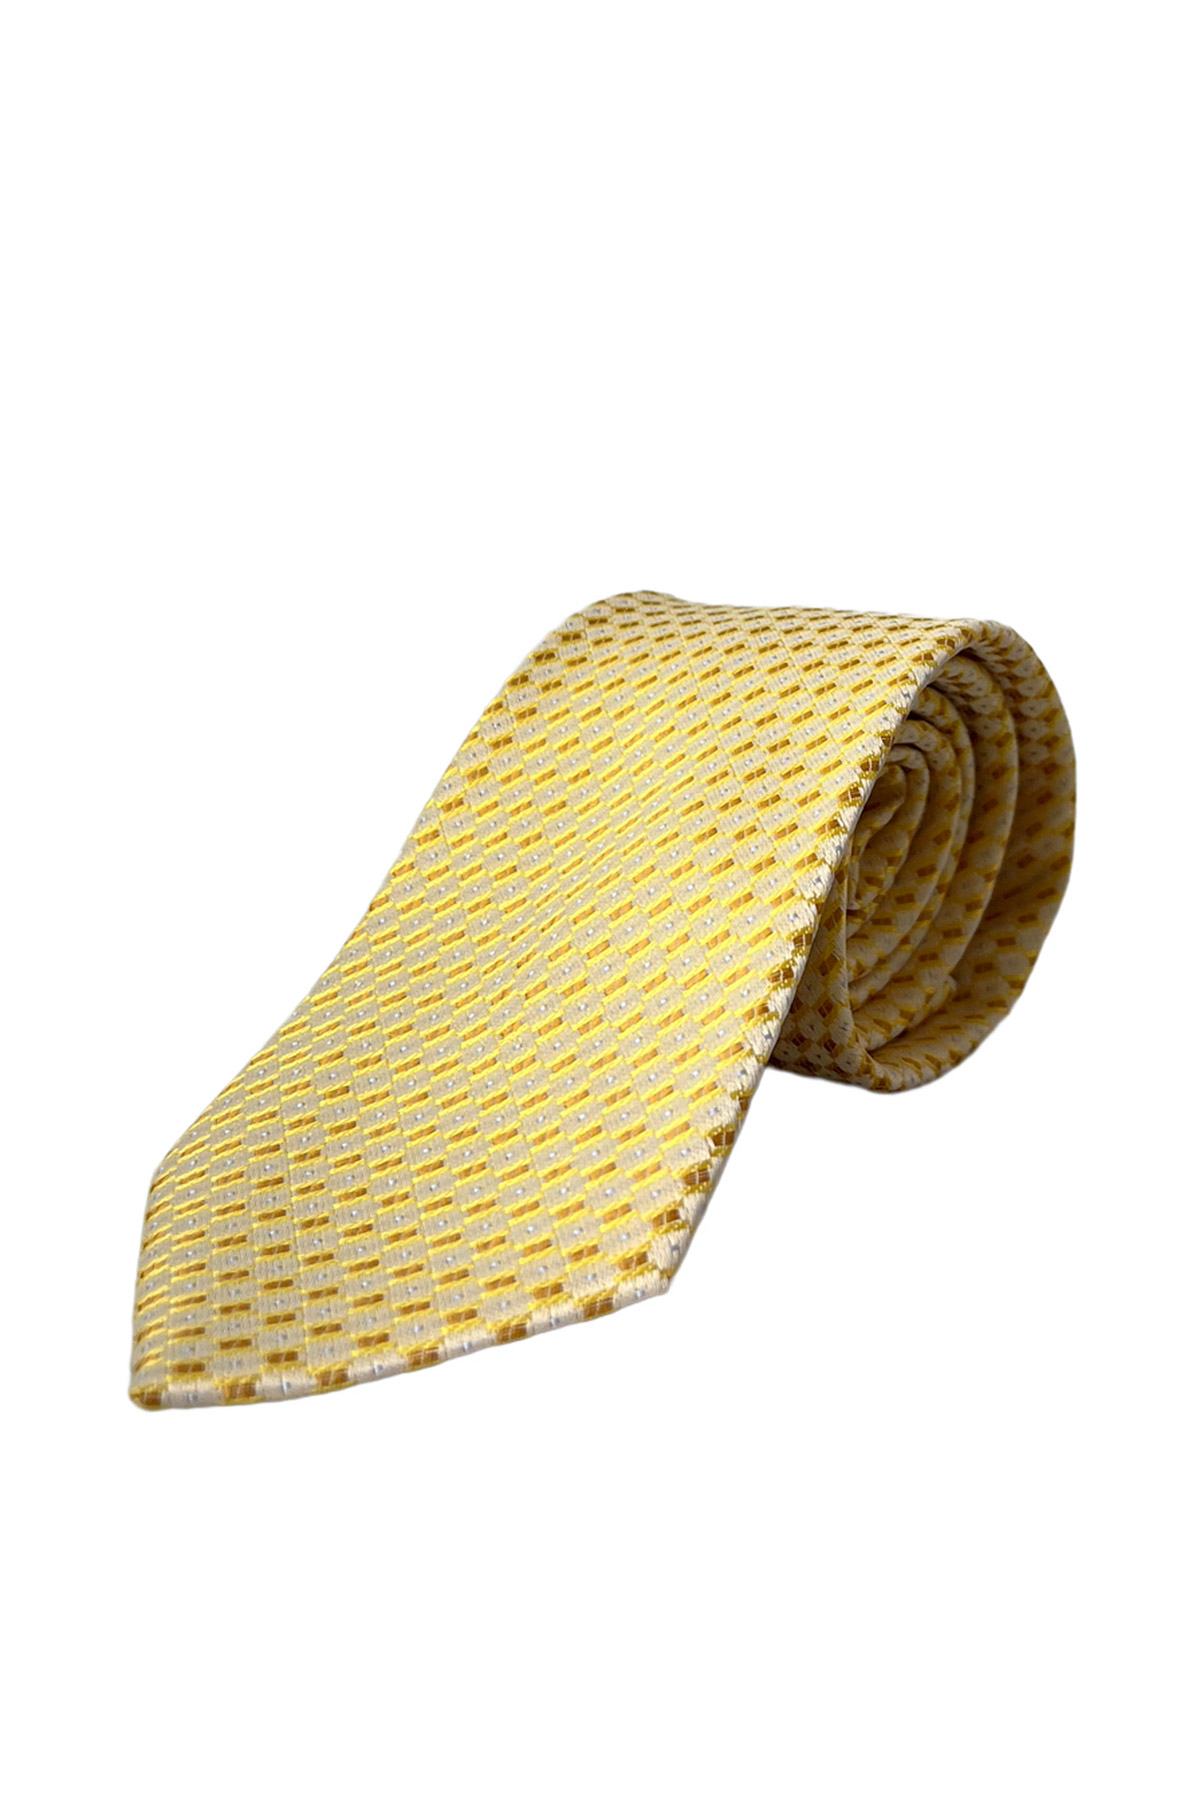 Cravatta uomo beige fantasia quadretti coccio 8cm da cerimonia elegante effetto seta